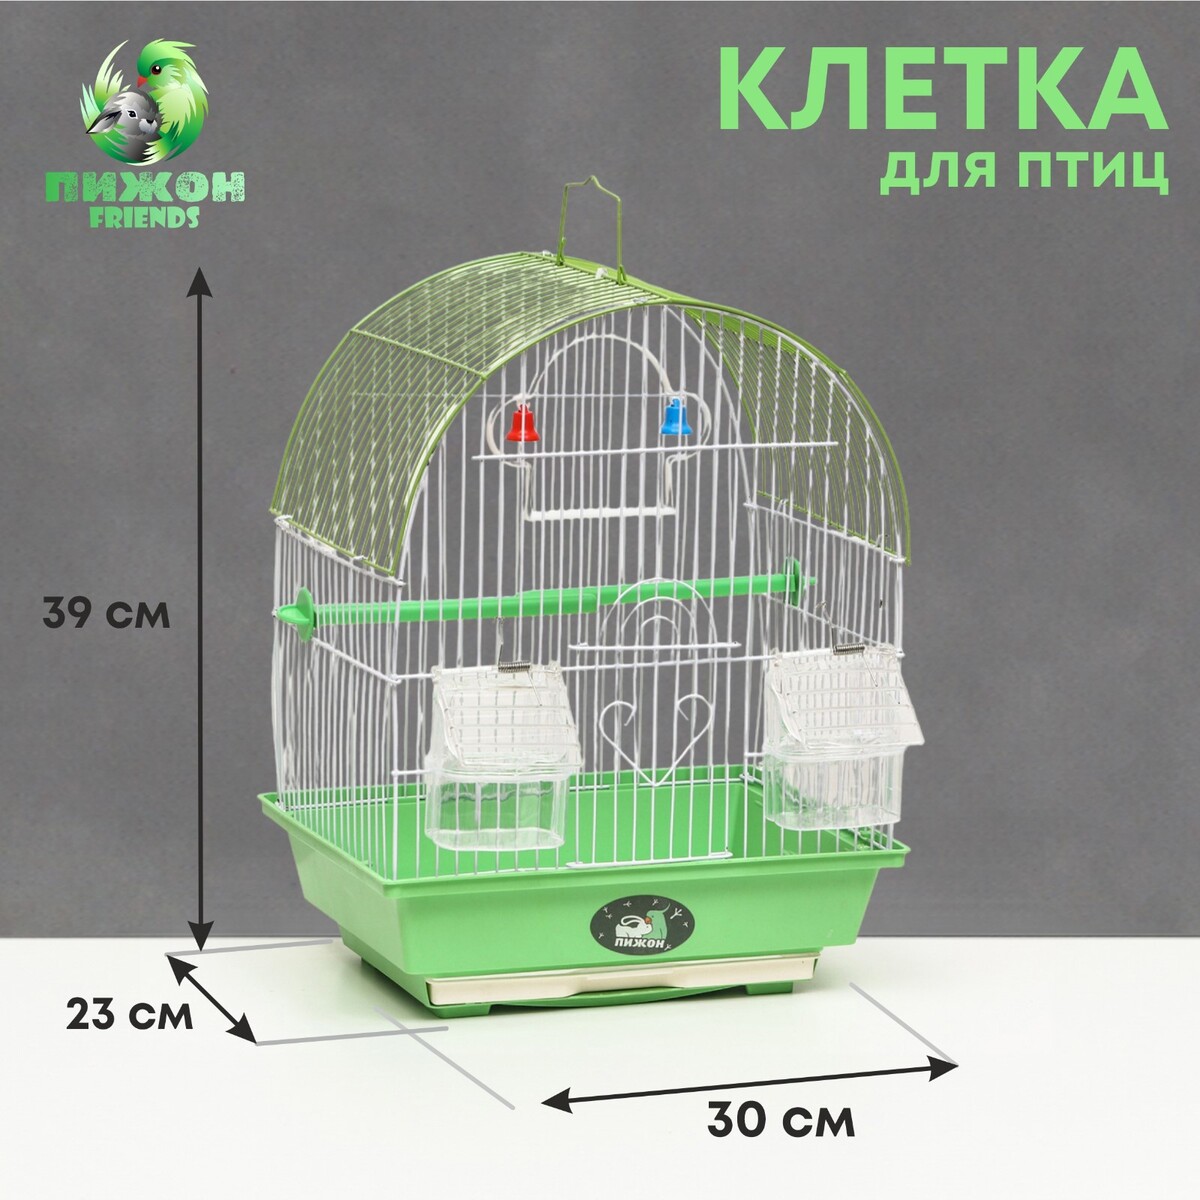 Клетка для птиц укомплектованная bd-1/3c, 30 х 23 х 39 см, зеленая сочинительница птиц